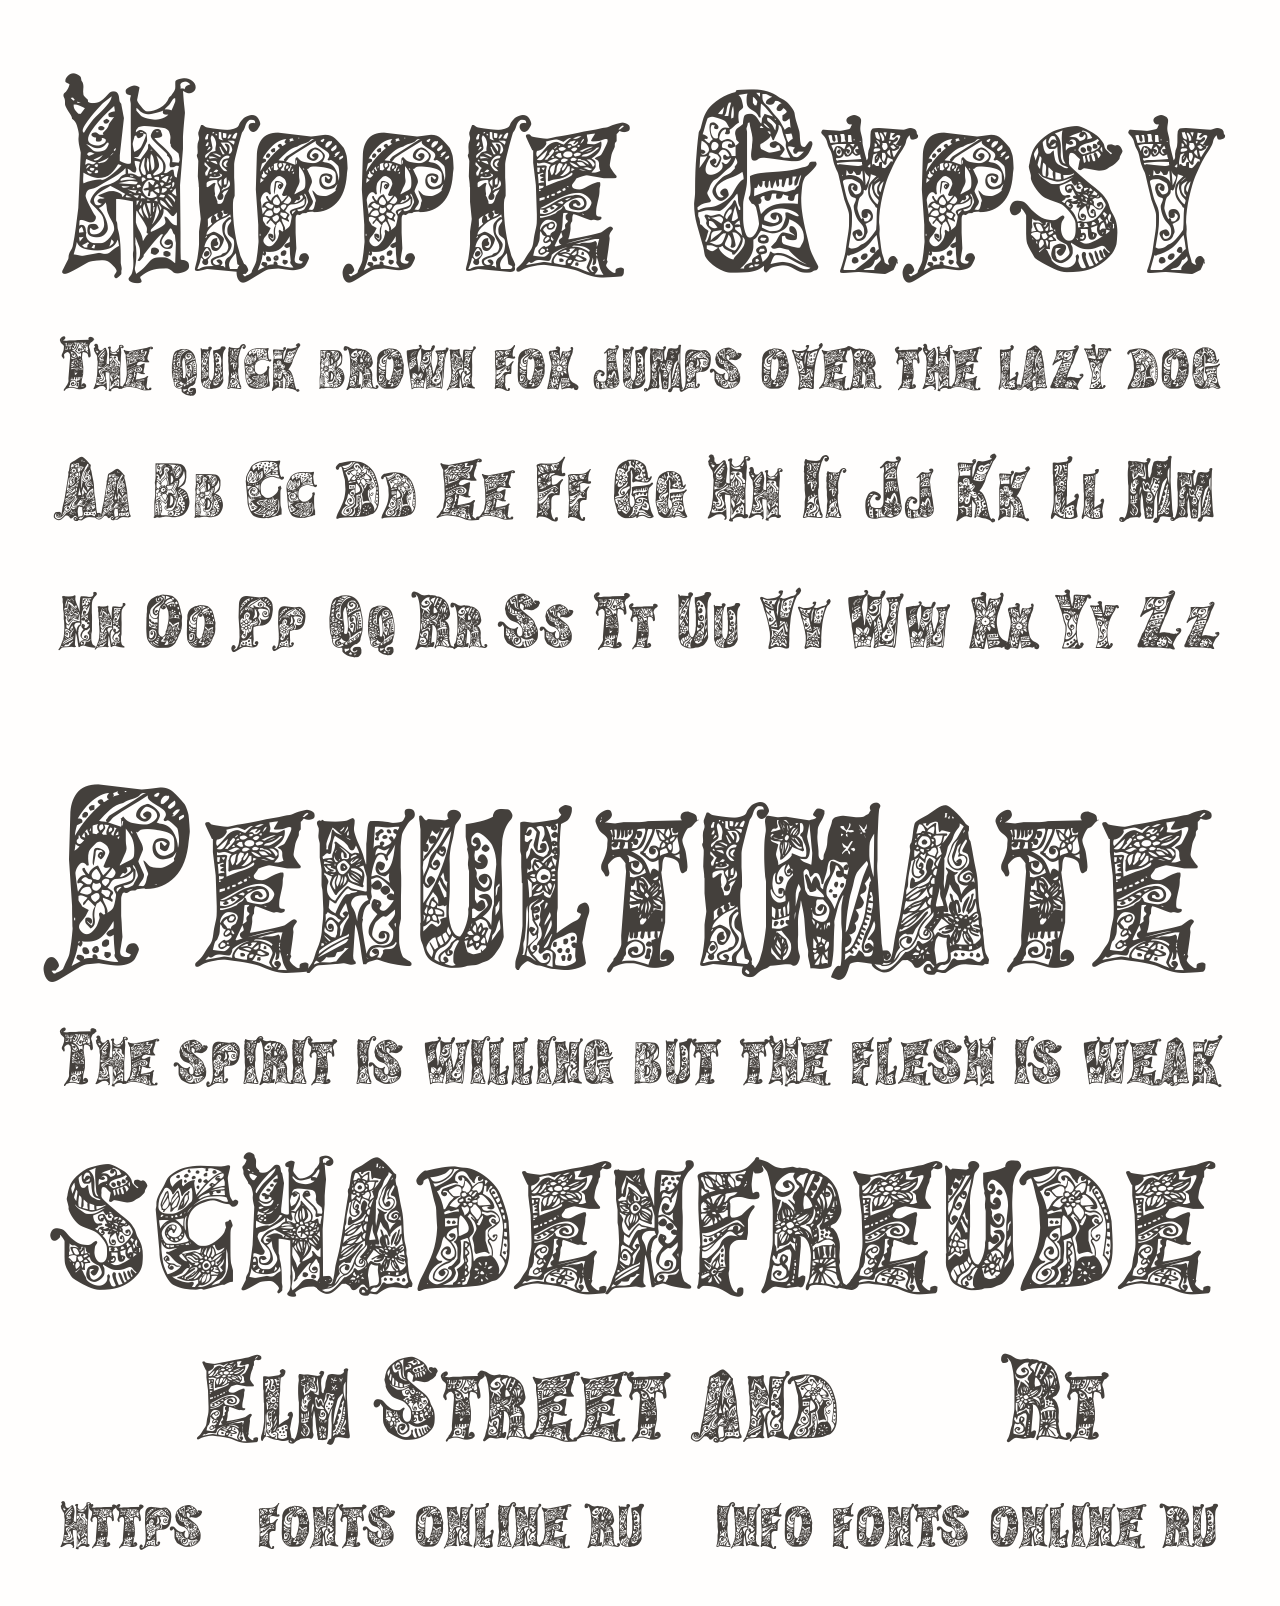 Шрифт Hippie Gypsy